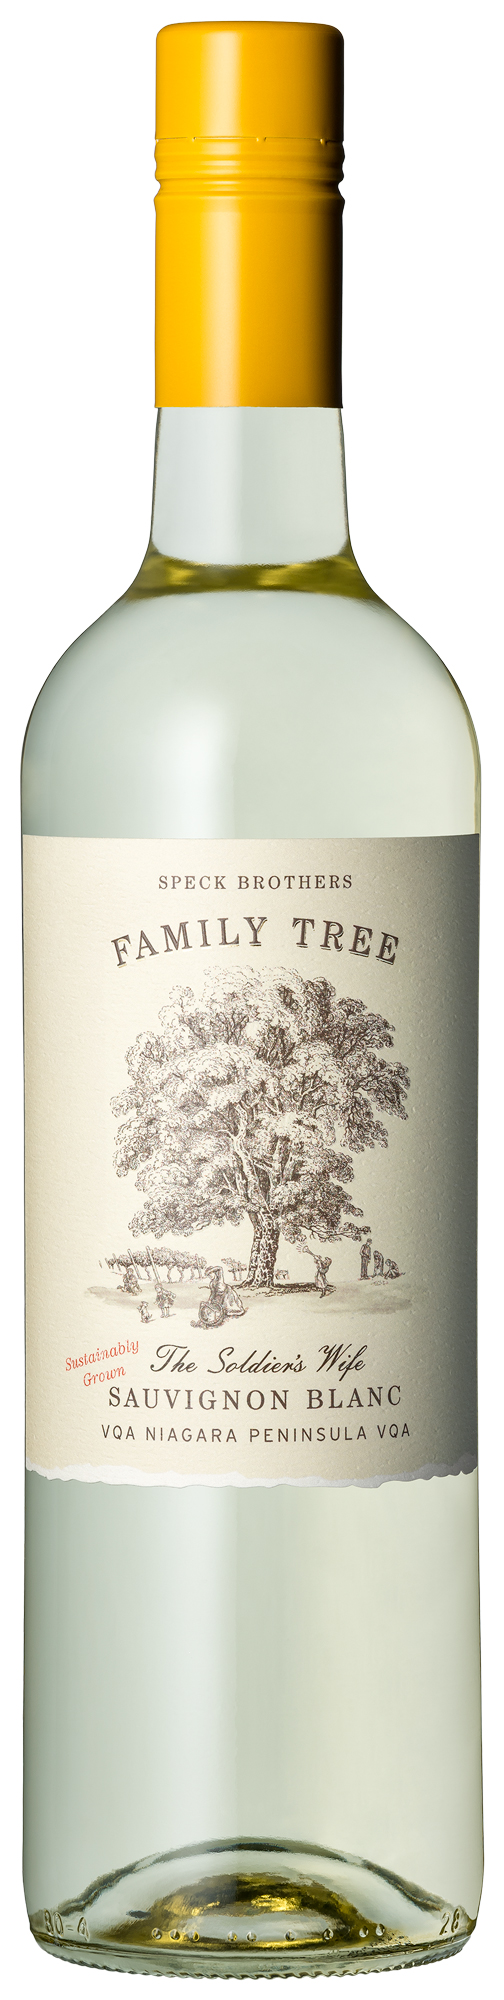 Speck Bros. Family Tree ‘The Soldier’s Wife’ Sauvignon Blanc 2021, VQA Niagara Peninsula